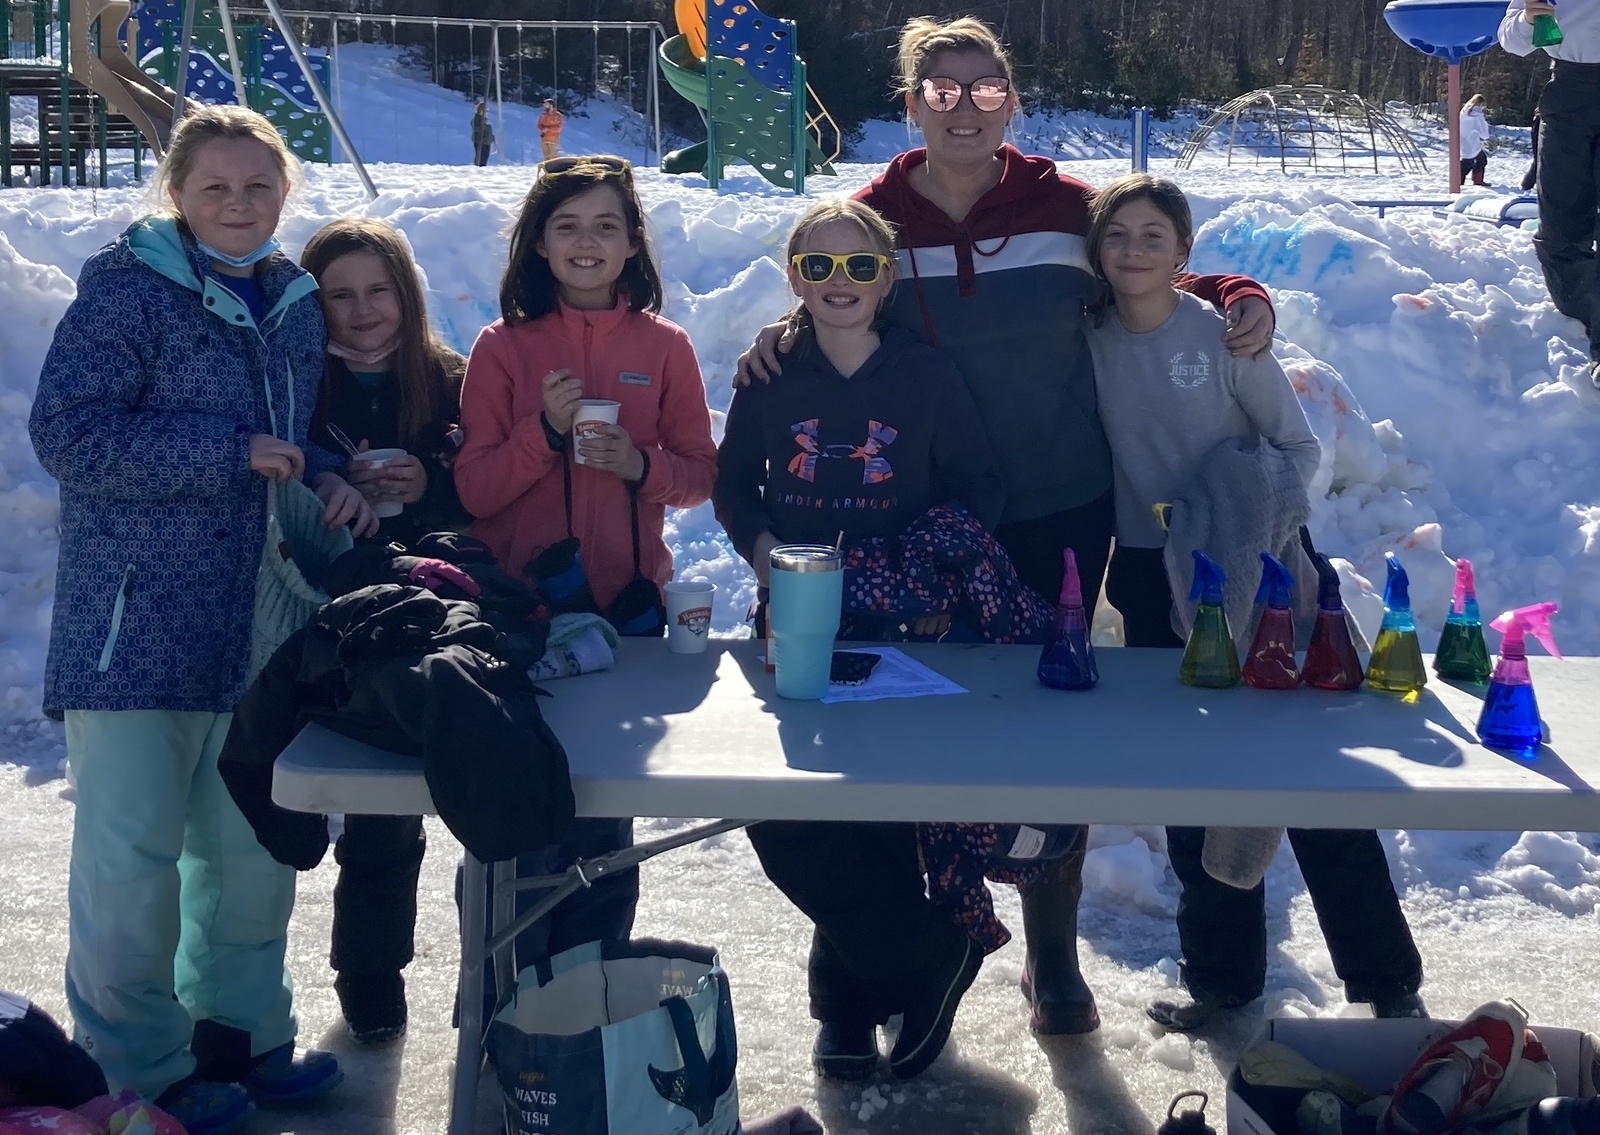 Rubric Week 4 support Harrison Elementary School WinterKids Winter Games 2022